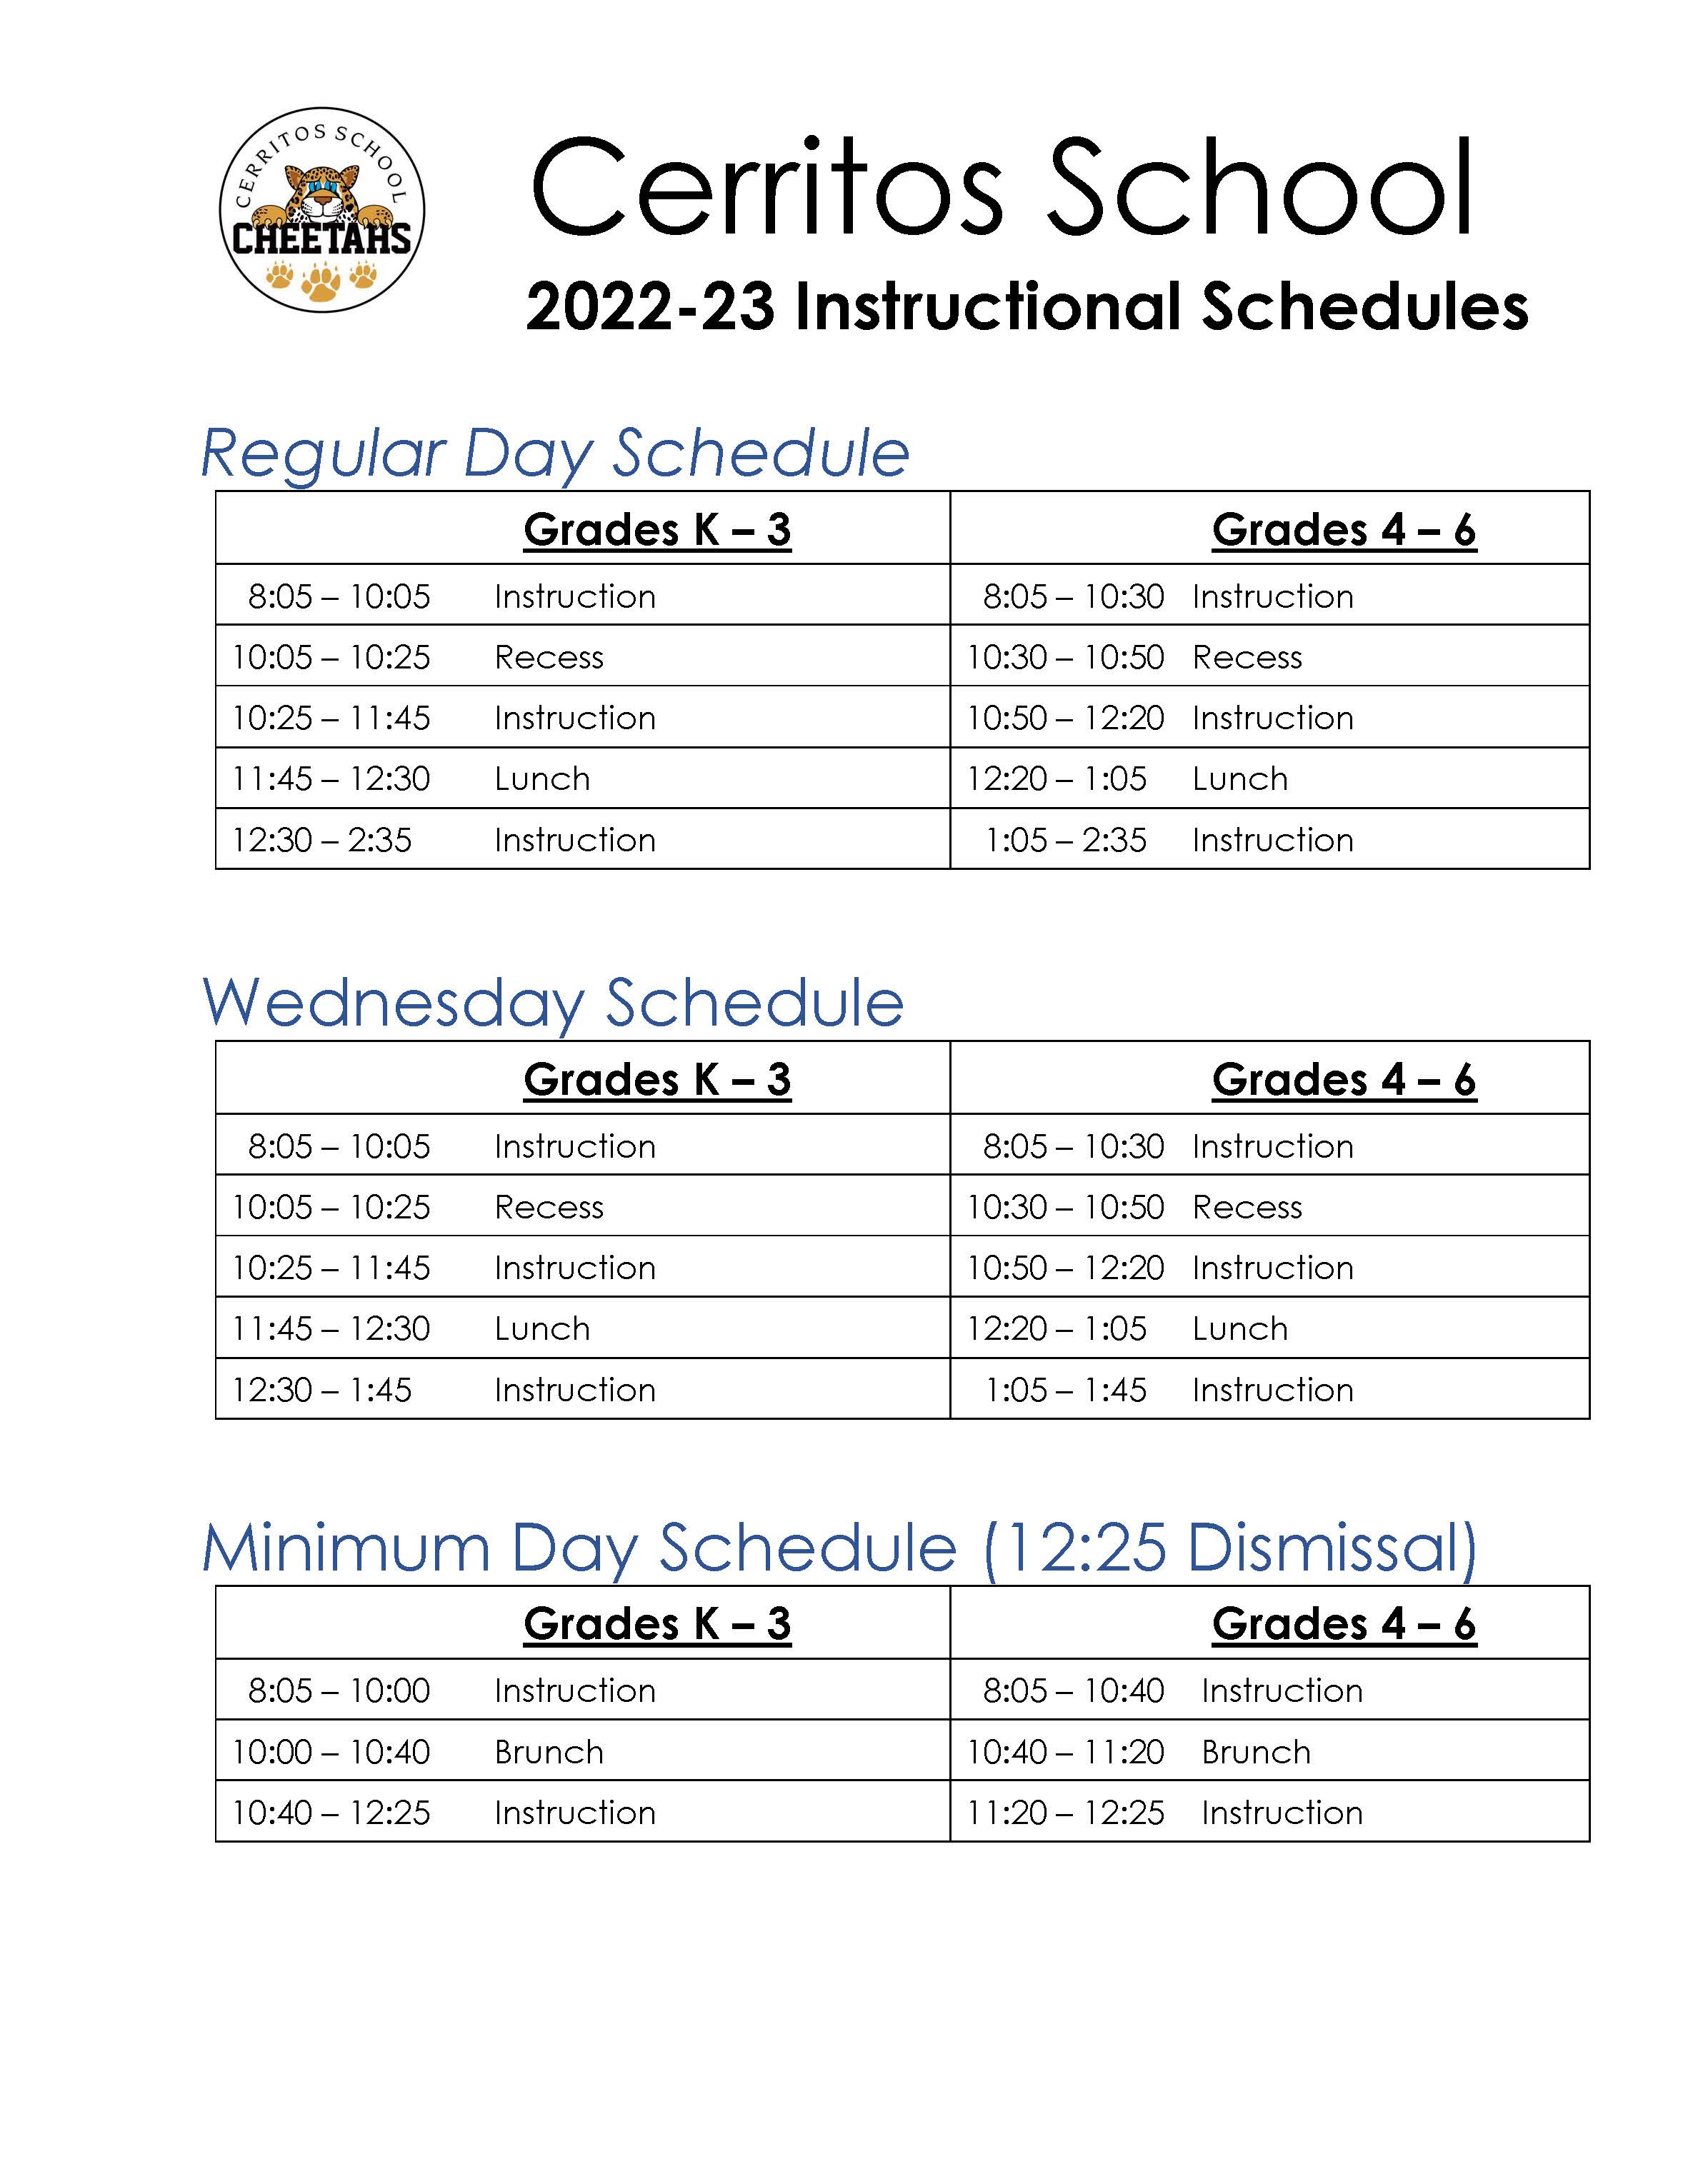 Cerritos School Schedule